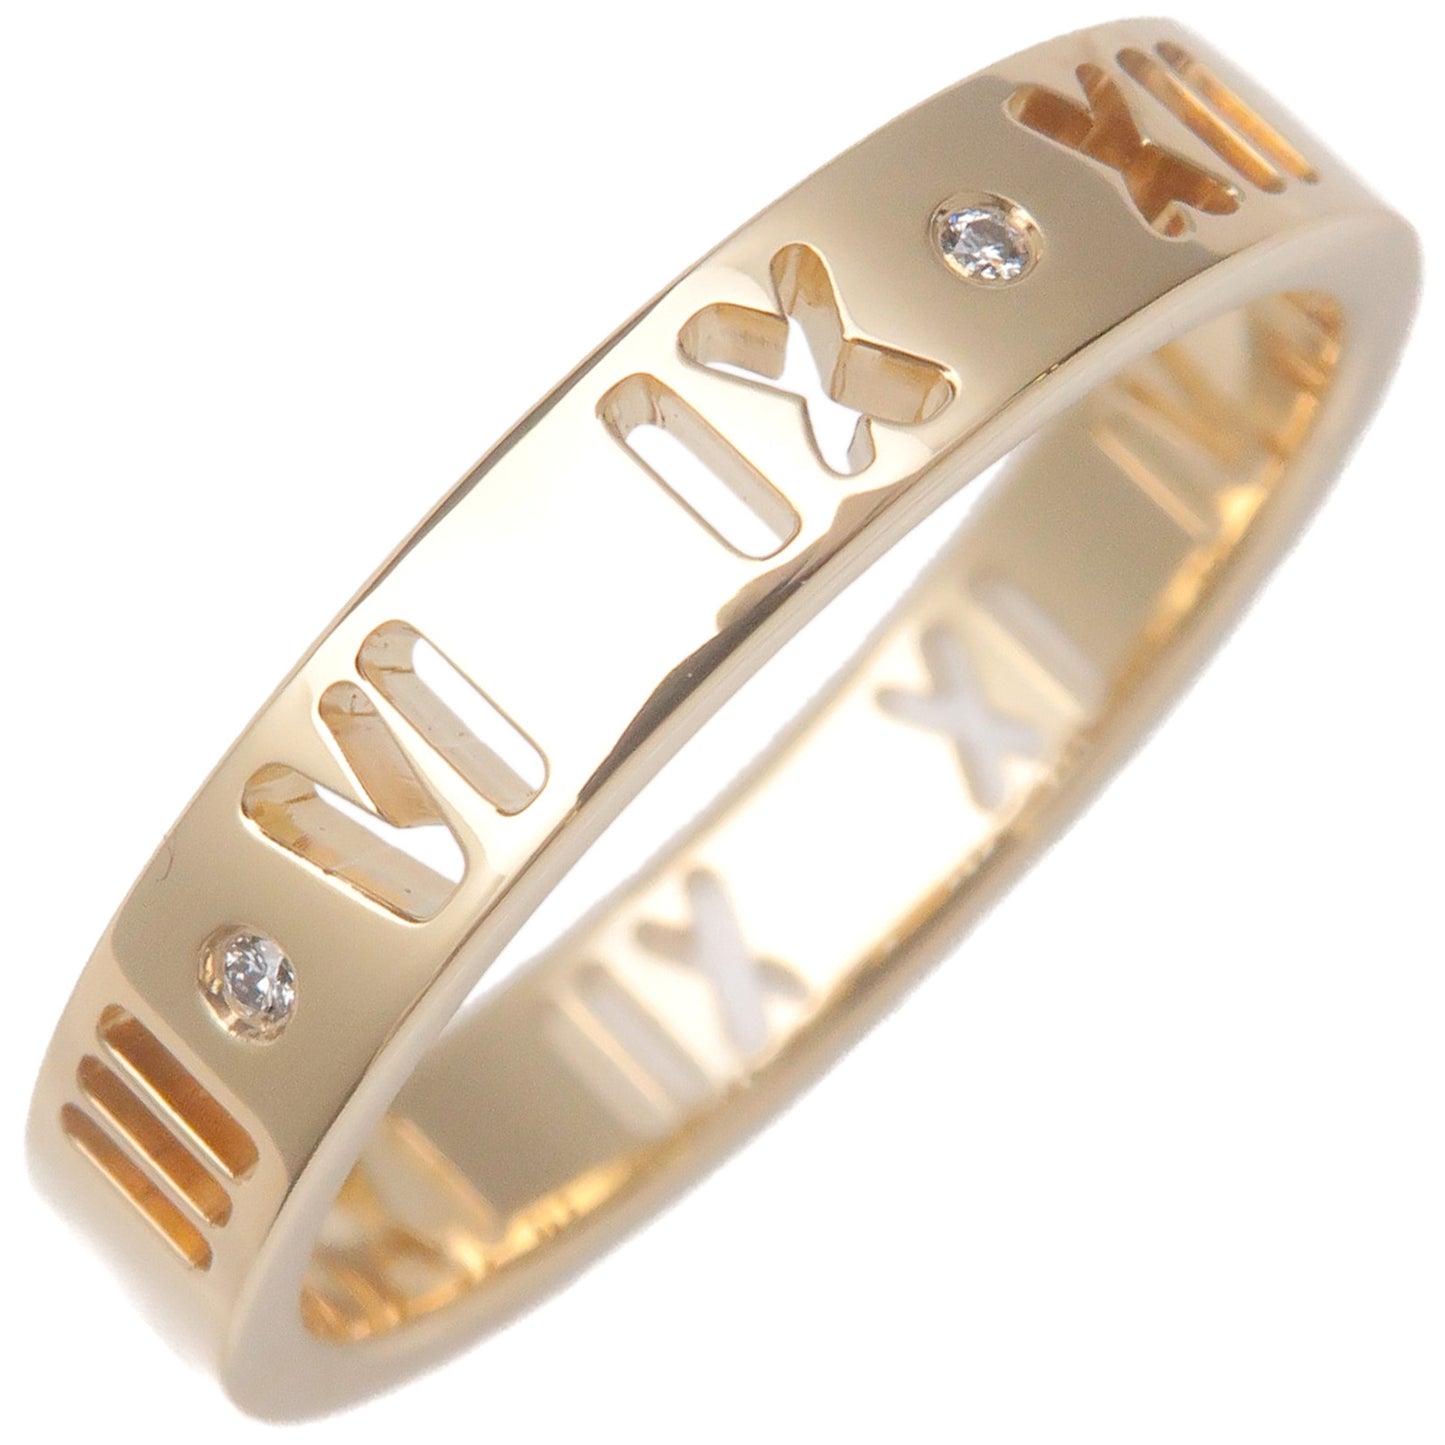 Tiffany&Co.-Pierced-Atlas-4P-Diamond-Ring-Yellow-Gold-US6.5